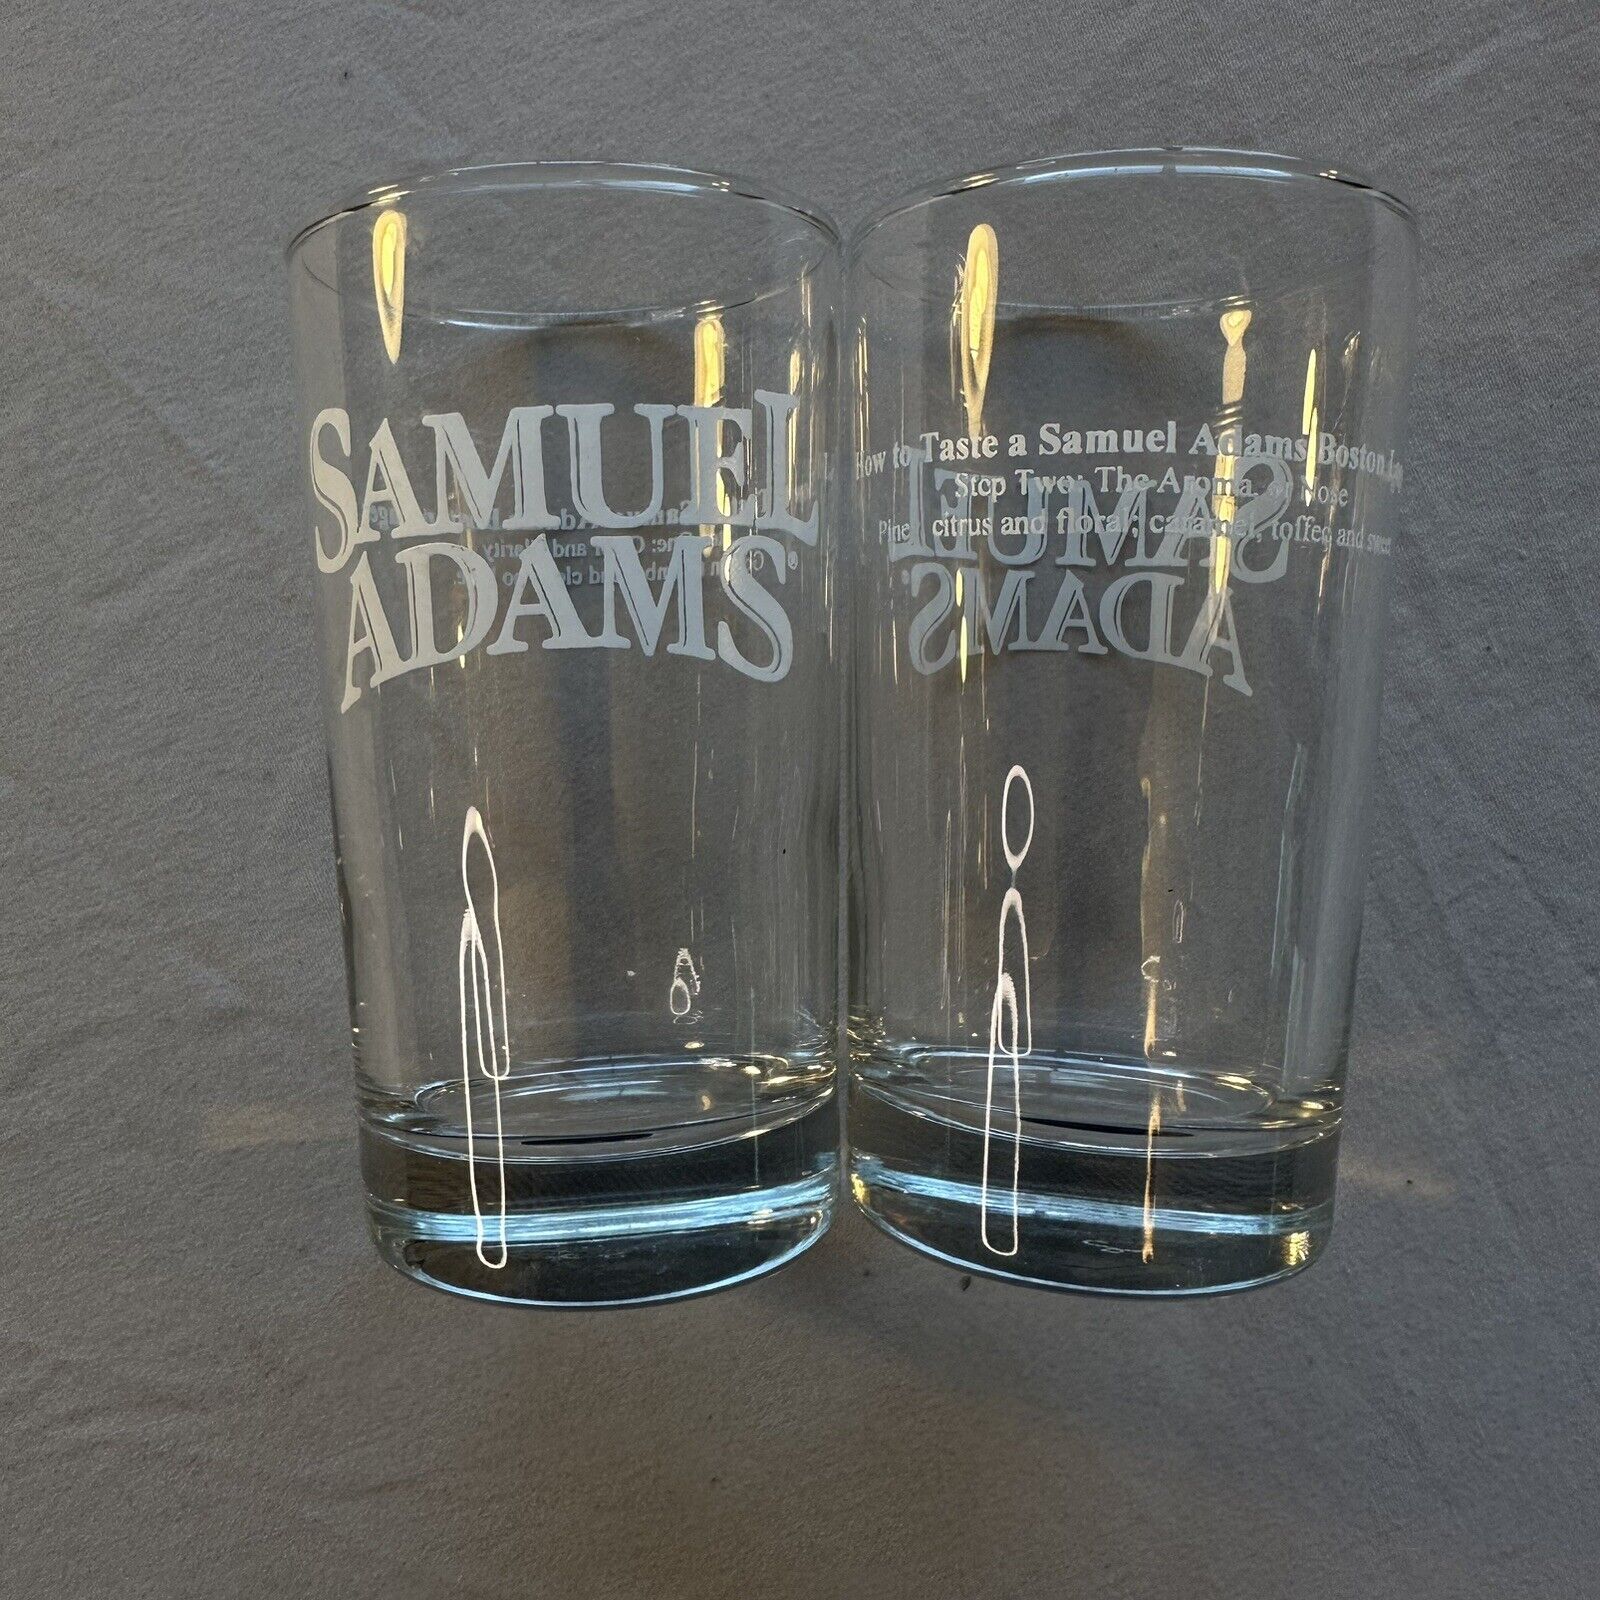 Set 2 Samuel Adams Boston Lager “How To Taste A Sam Adams” Beer Sampler Glasses